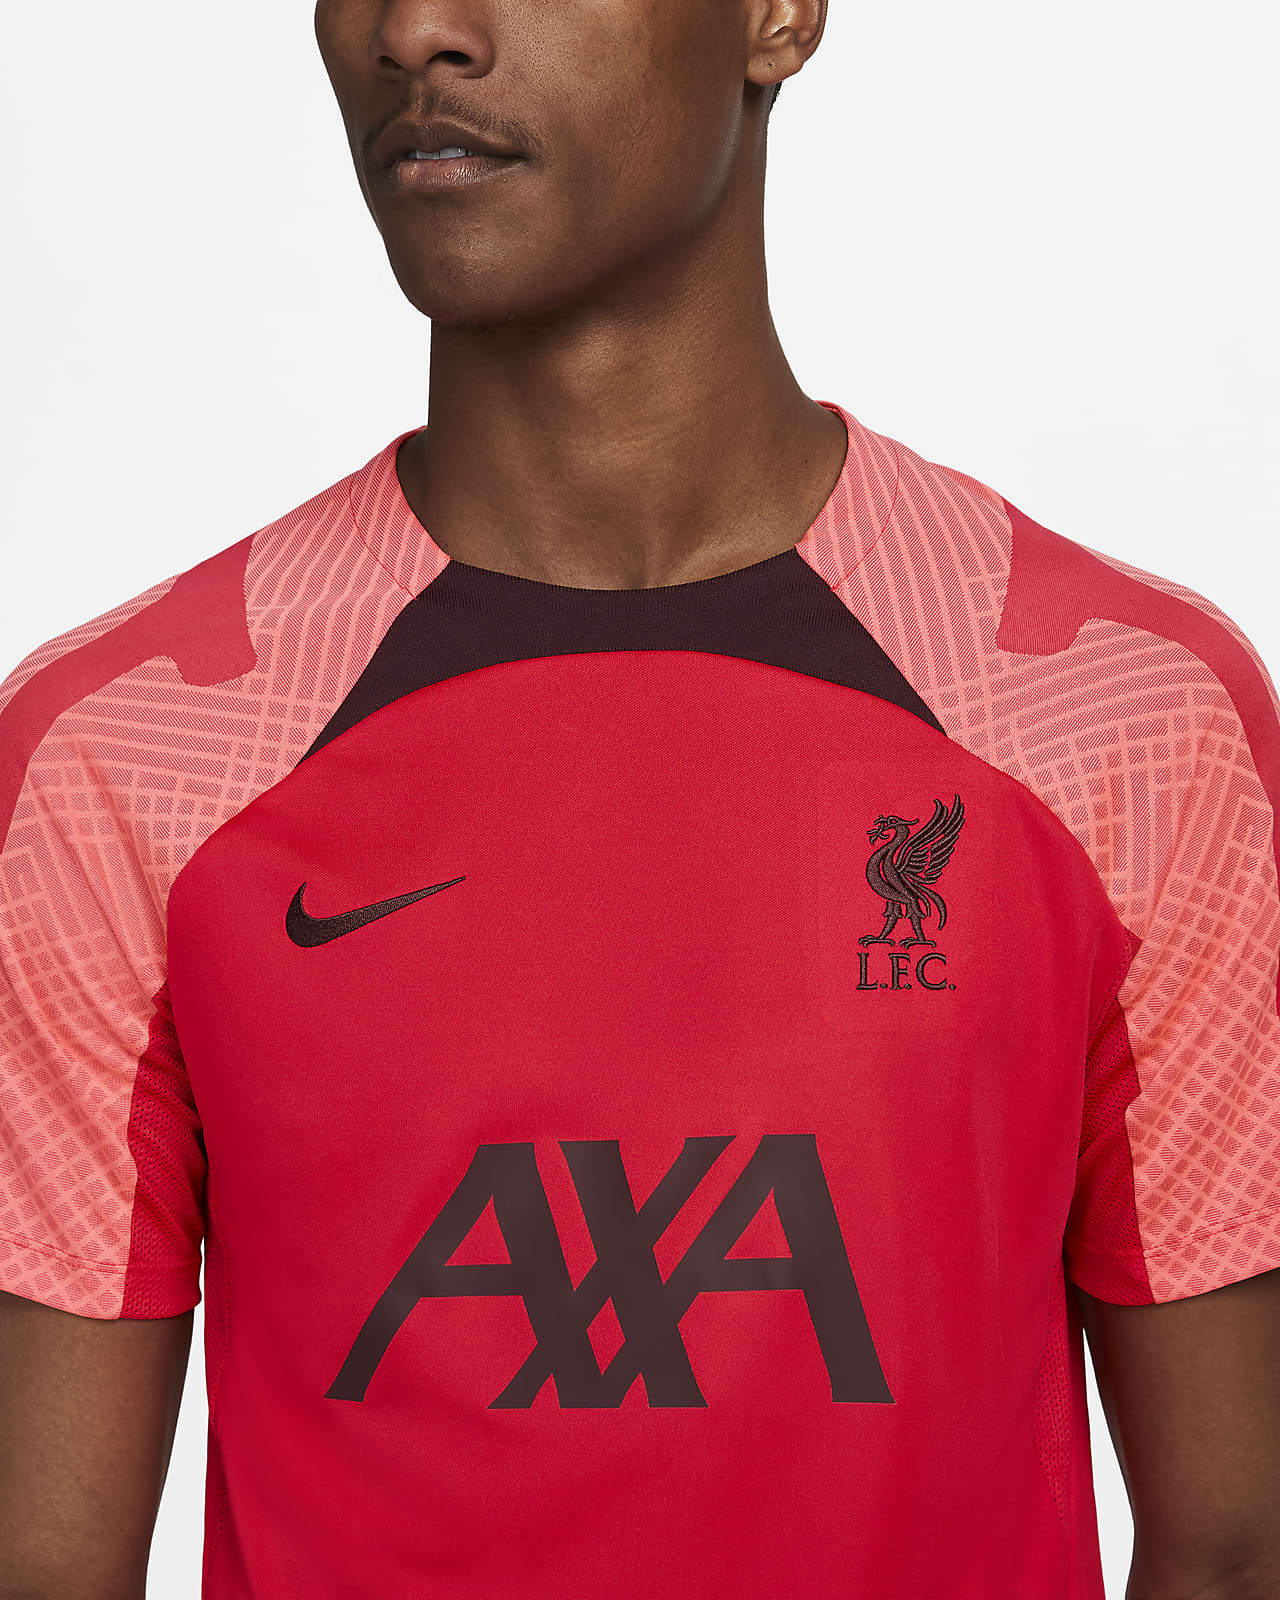 Nike Men's Dri-Fit Strike Short Sleeve Soccer Top, Large, Black